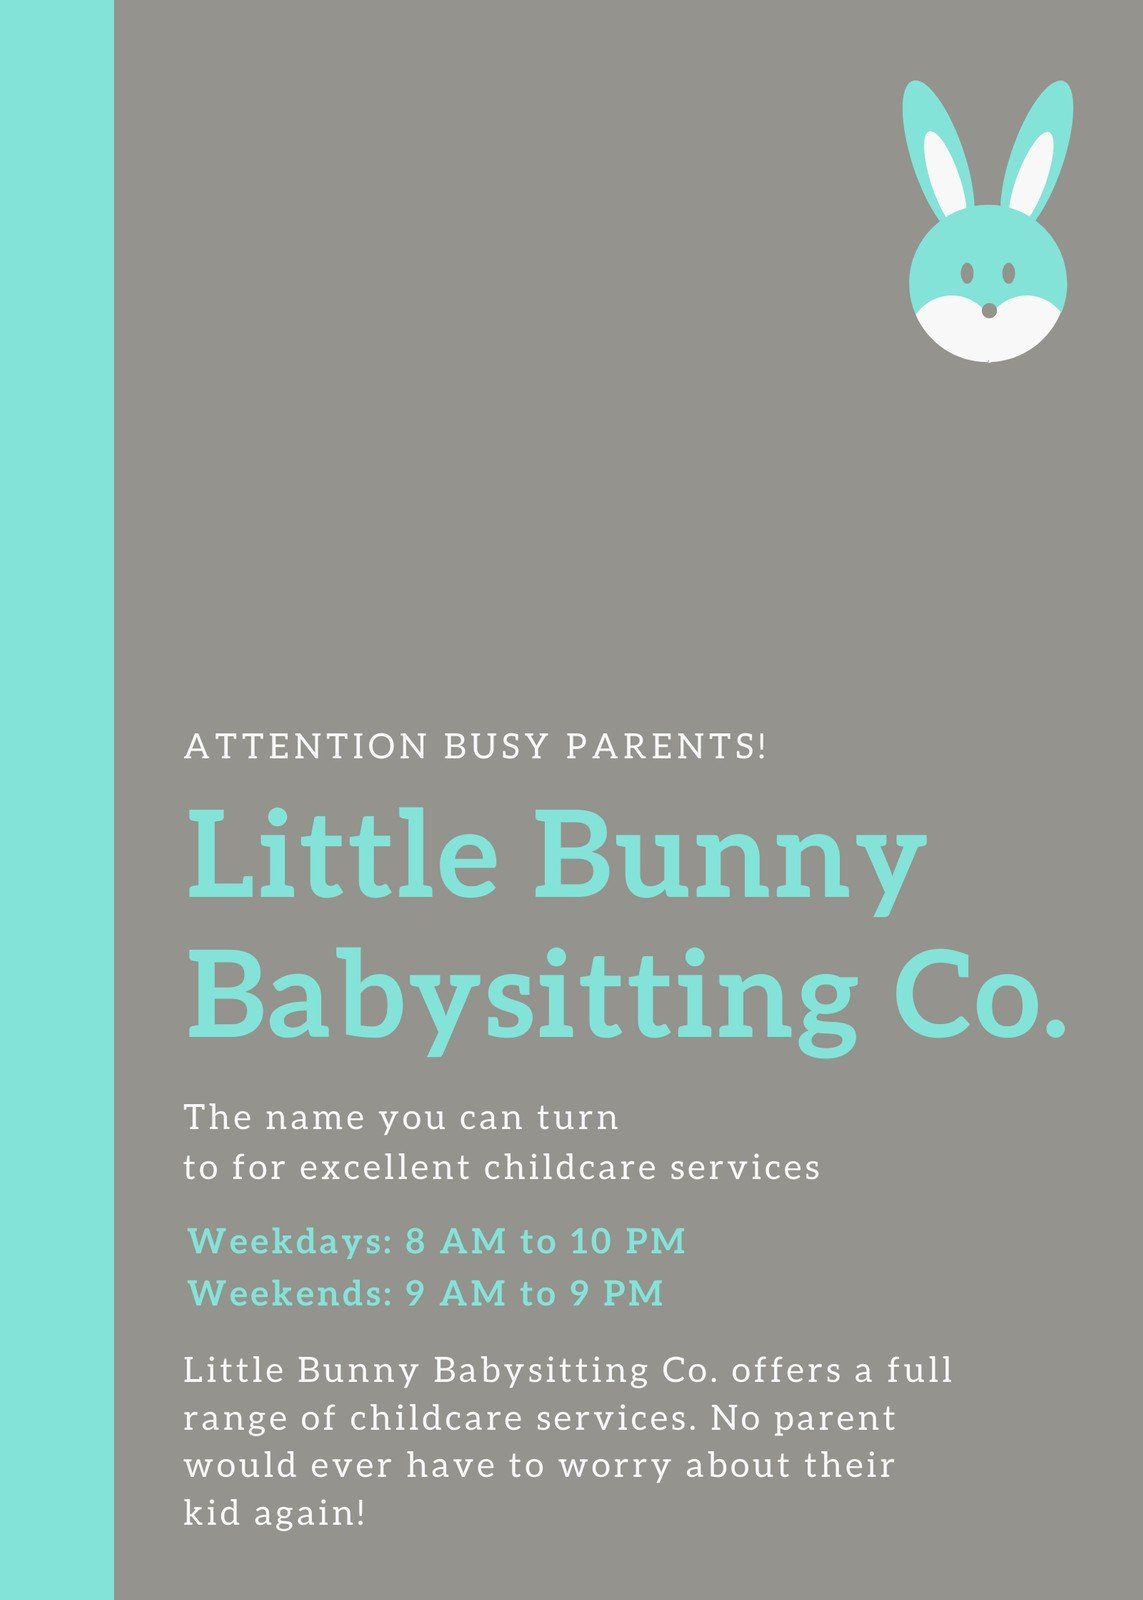 free-custom-printable-babysitting-flyer-templates-canva